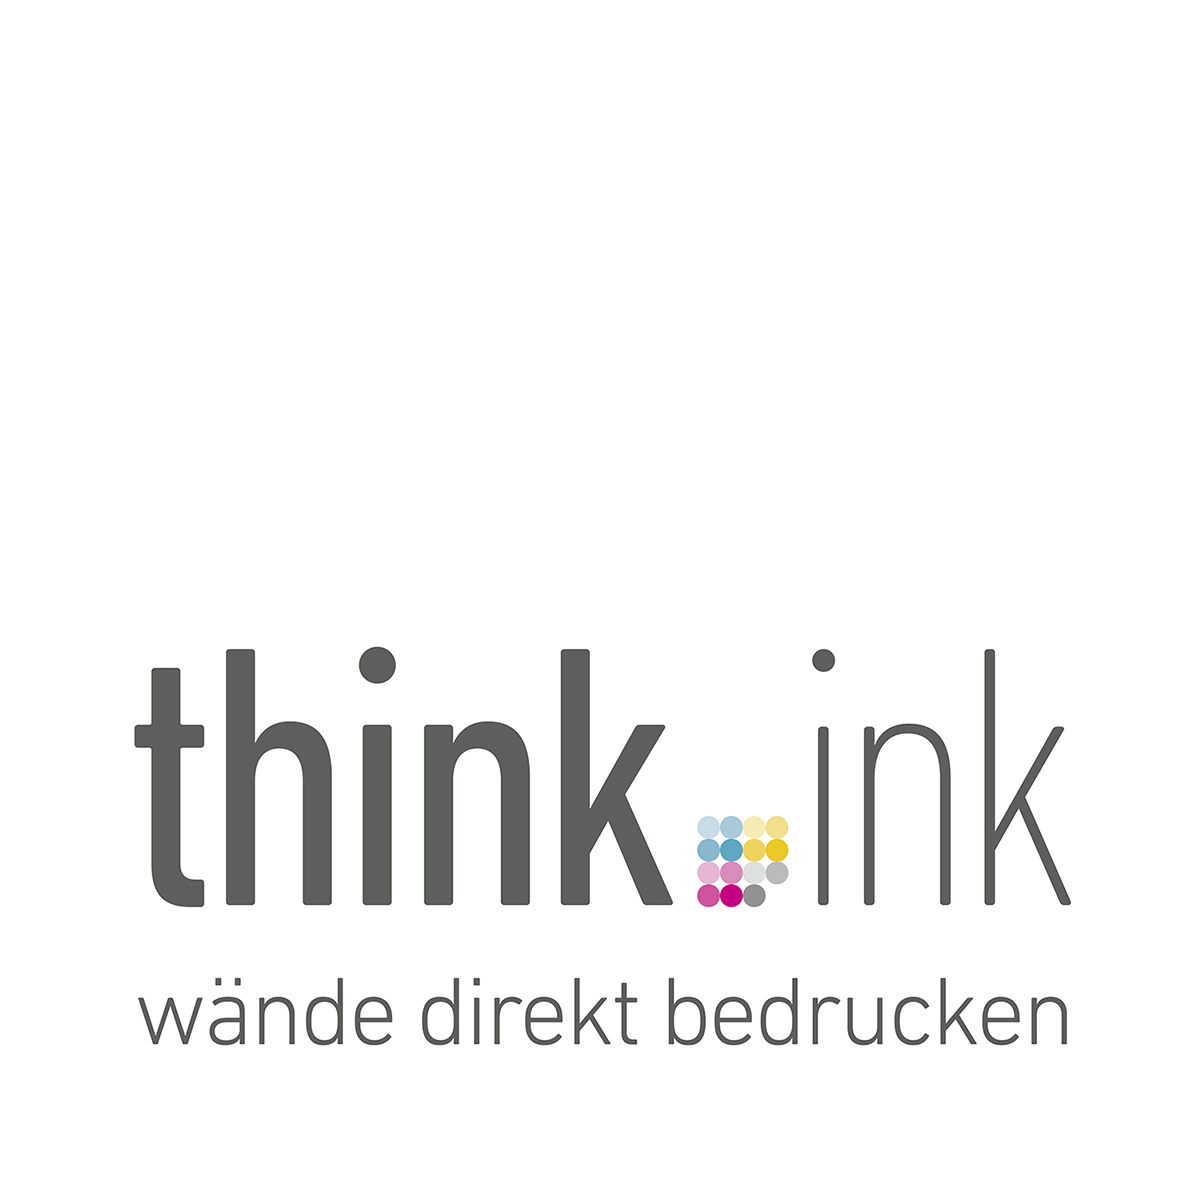 think ink – www.wanddruck.team